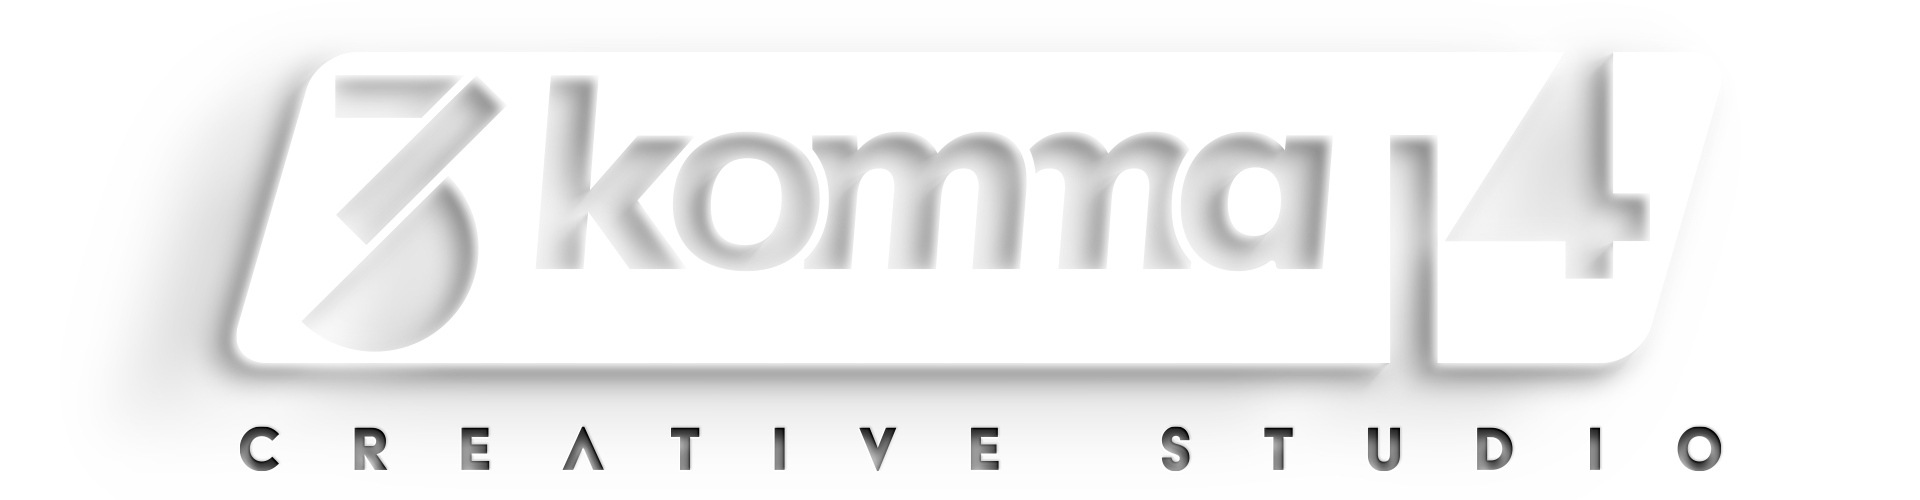 3komma14 creative studio  Logo